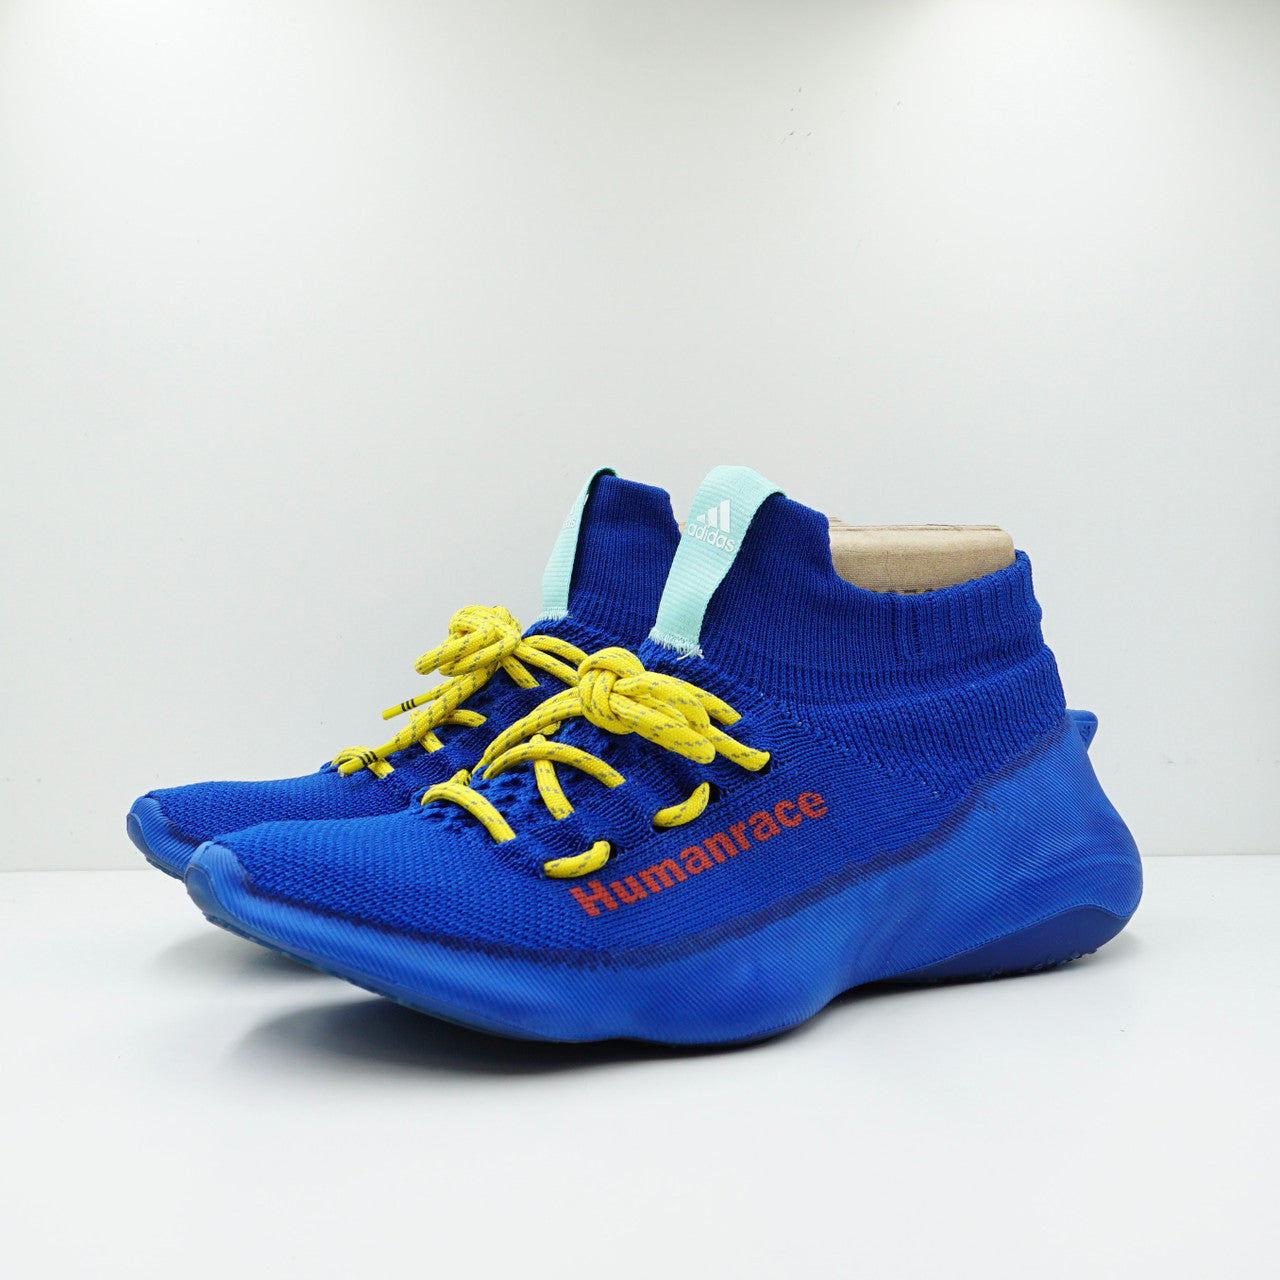 Adidas Humanrace Sičhona Blue